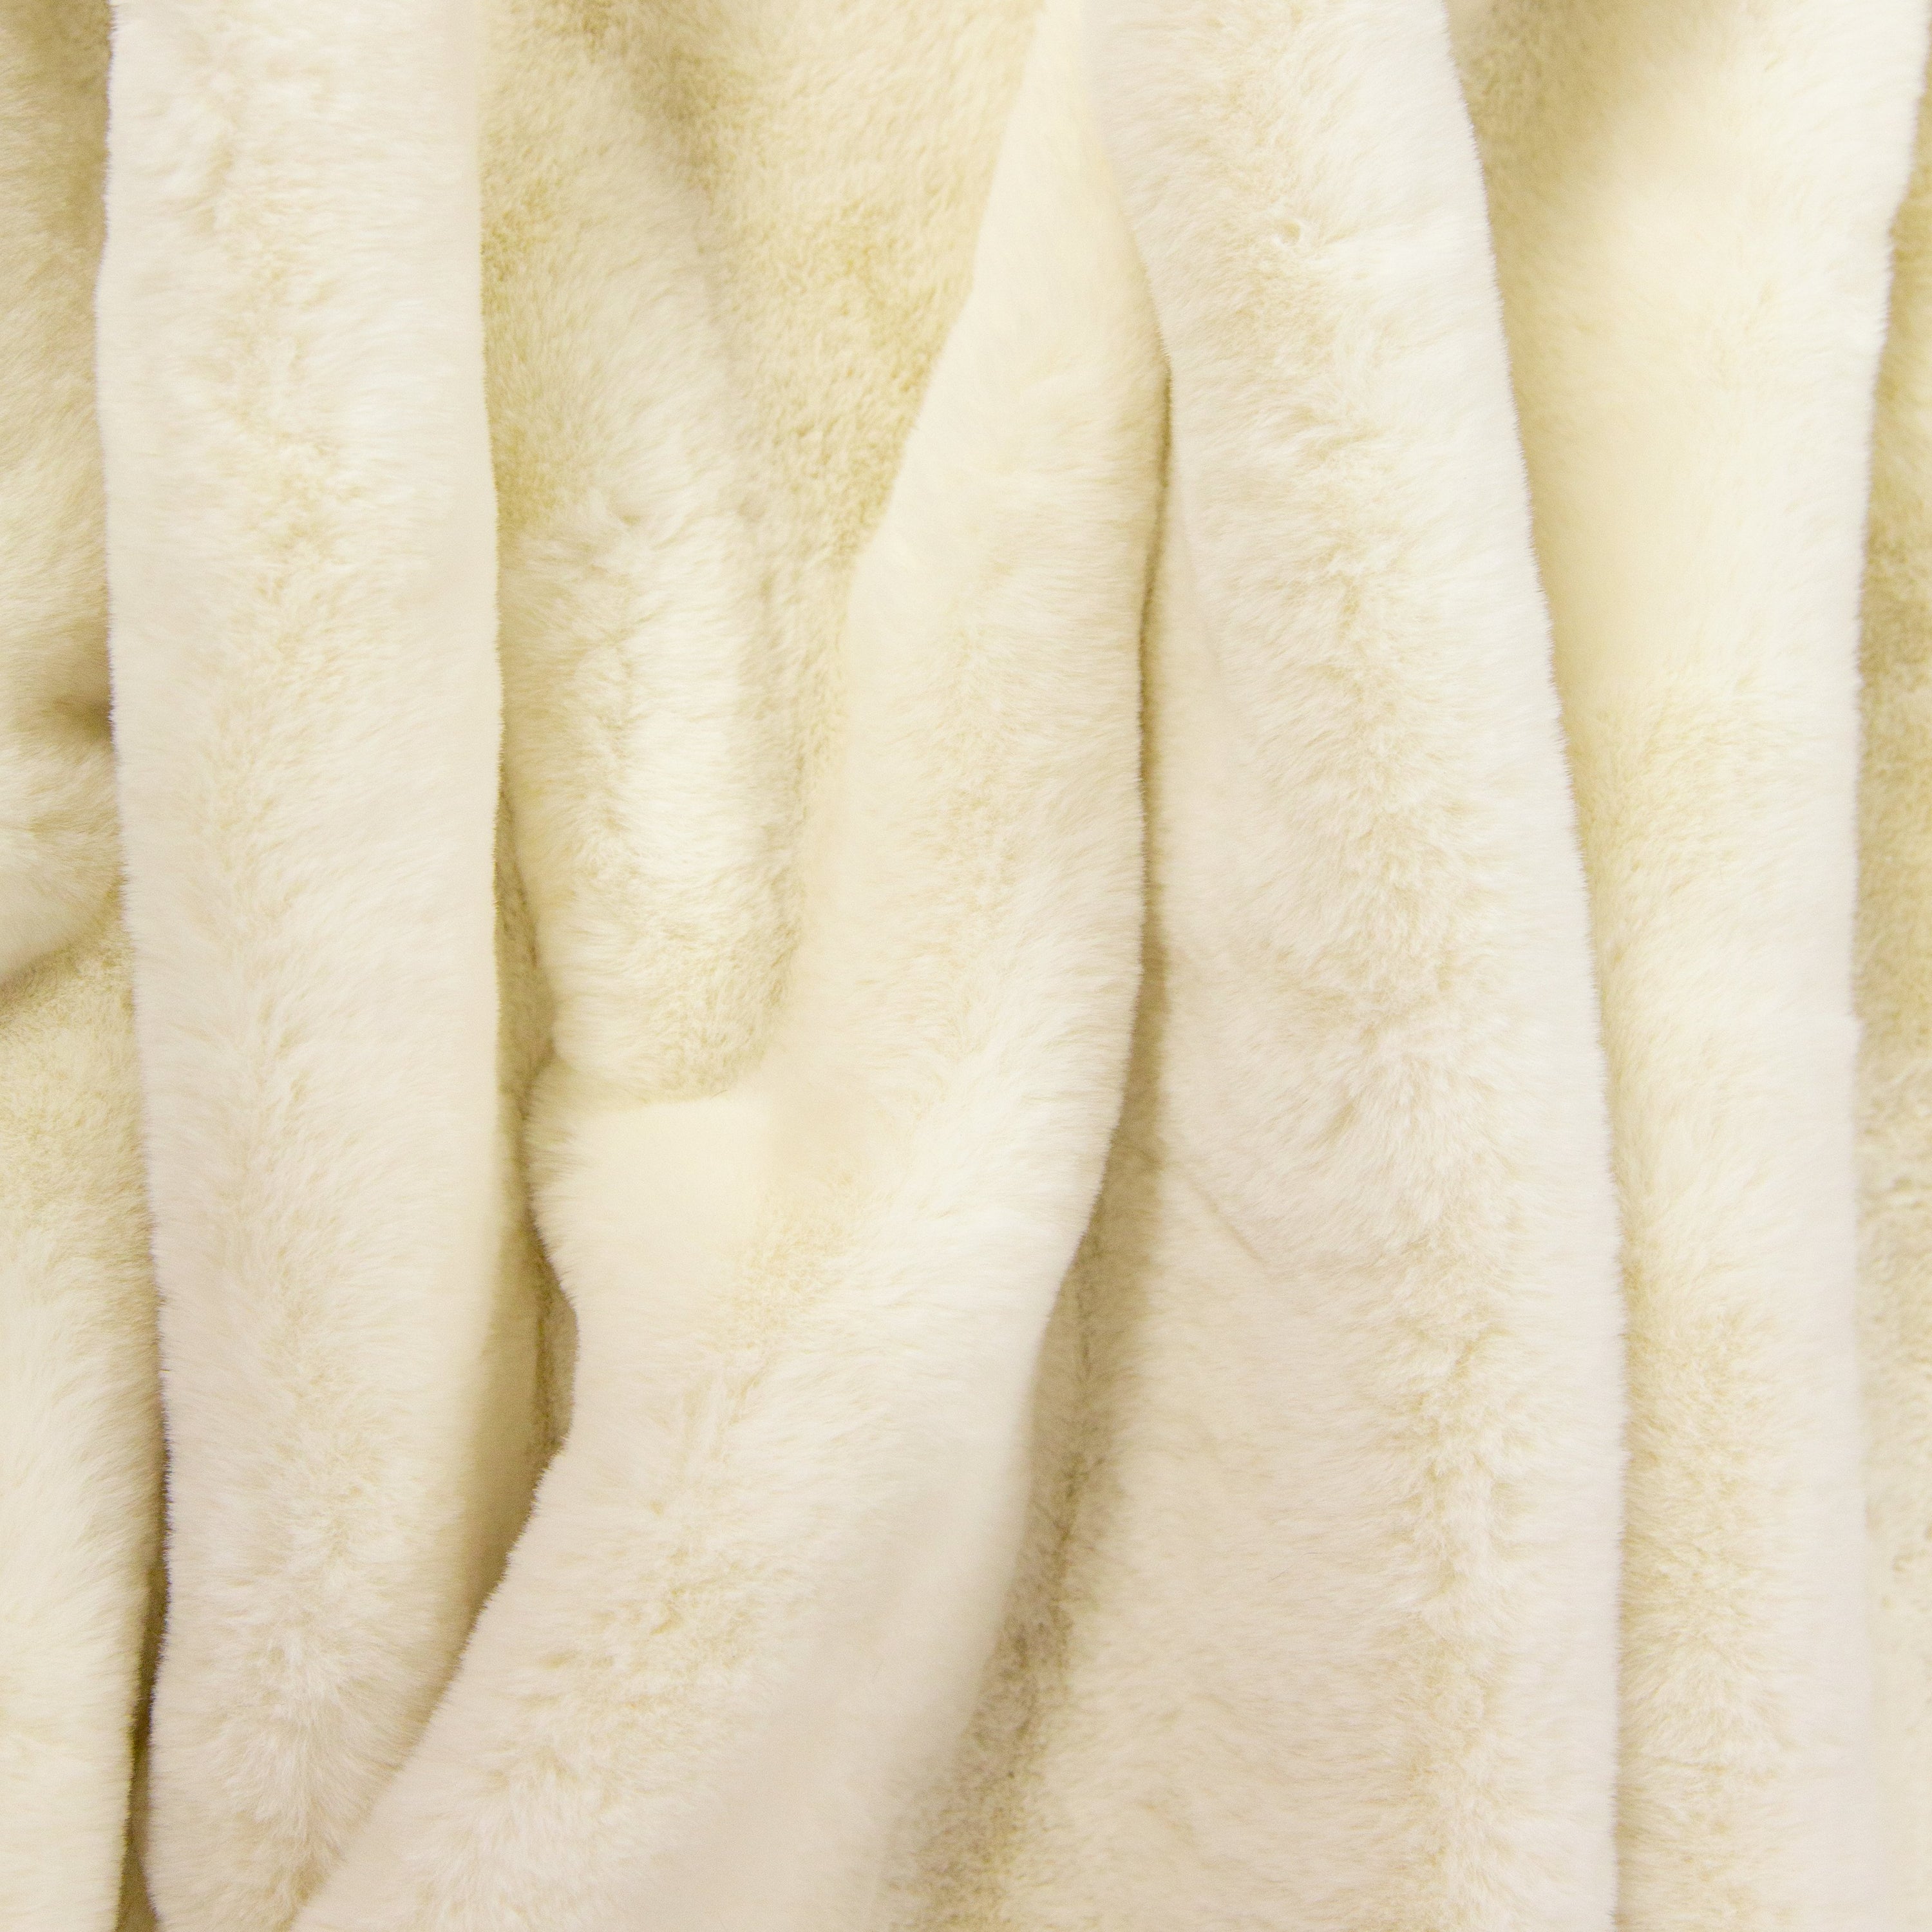 Special Edition Villanova Large White Blanket